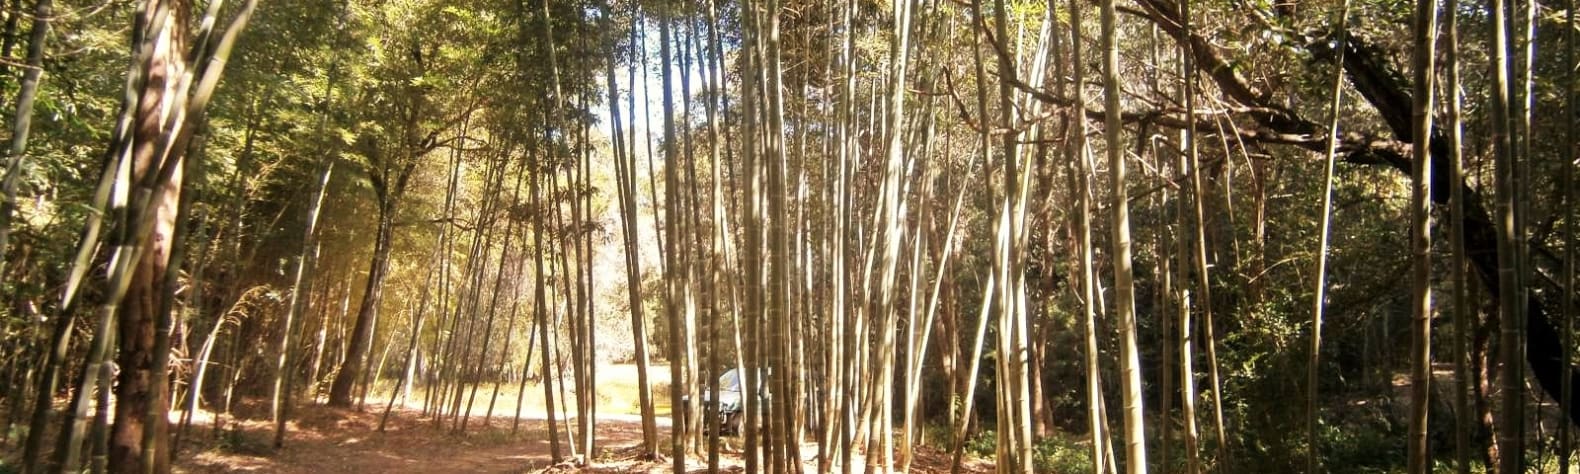 Bamboo Australia